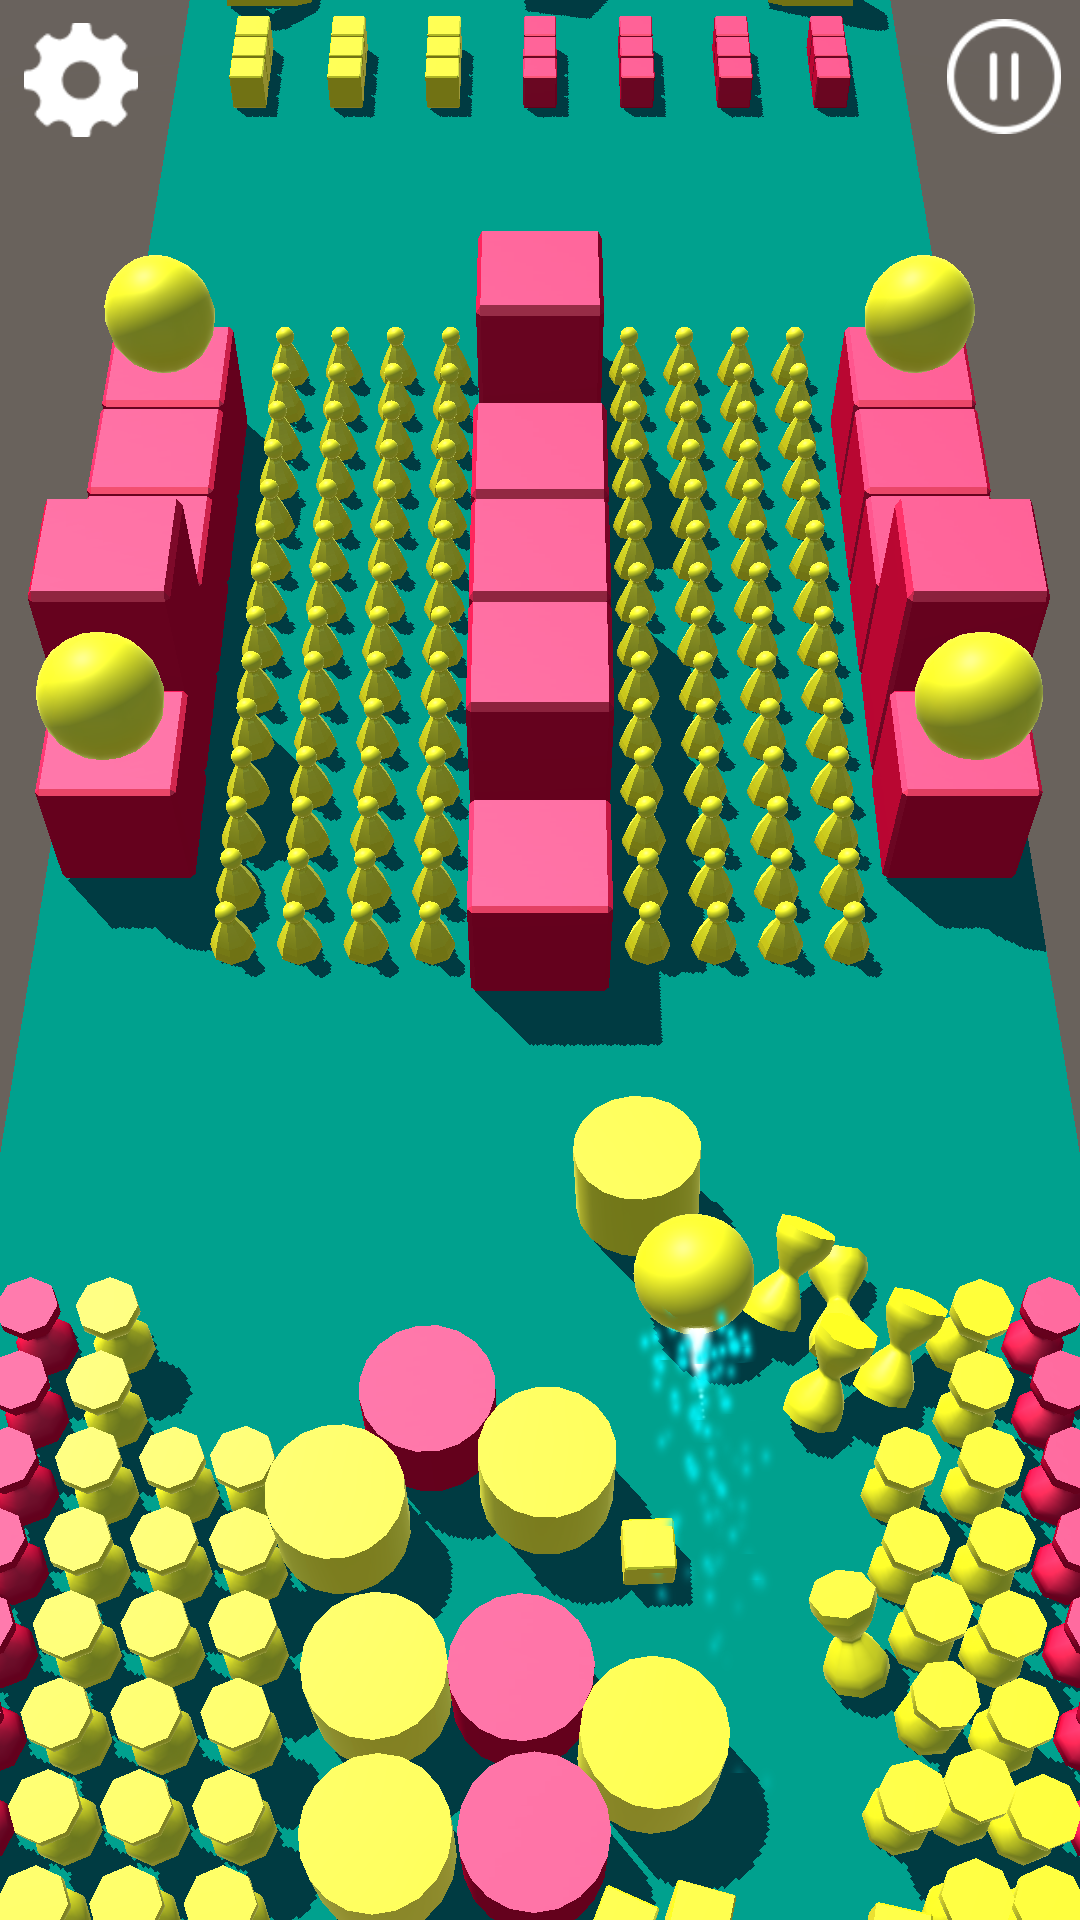 Color Dot 3D : Ball bump gameのキャプチャ